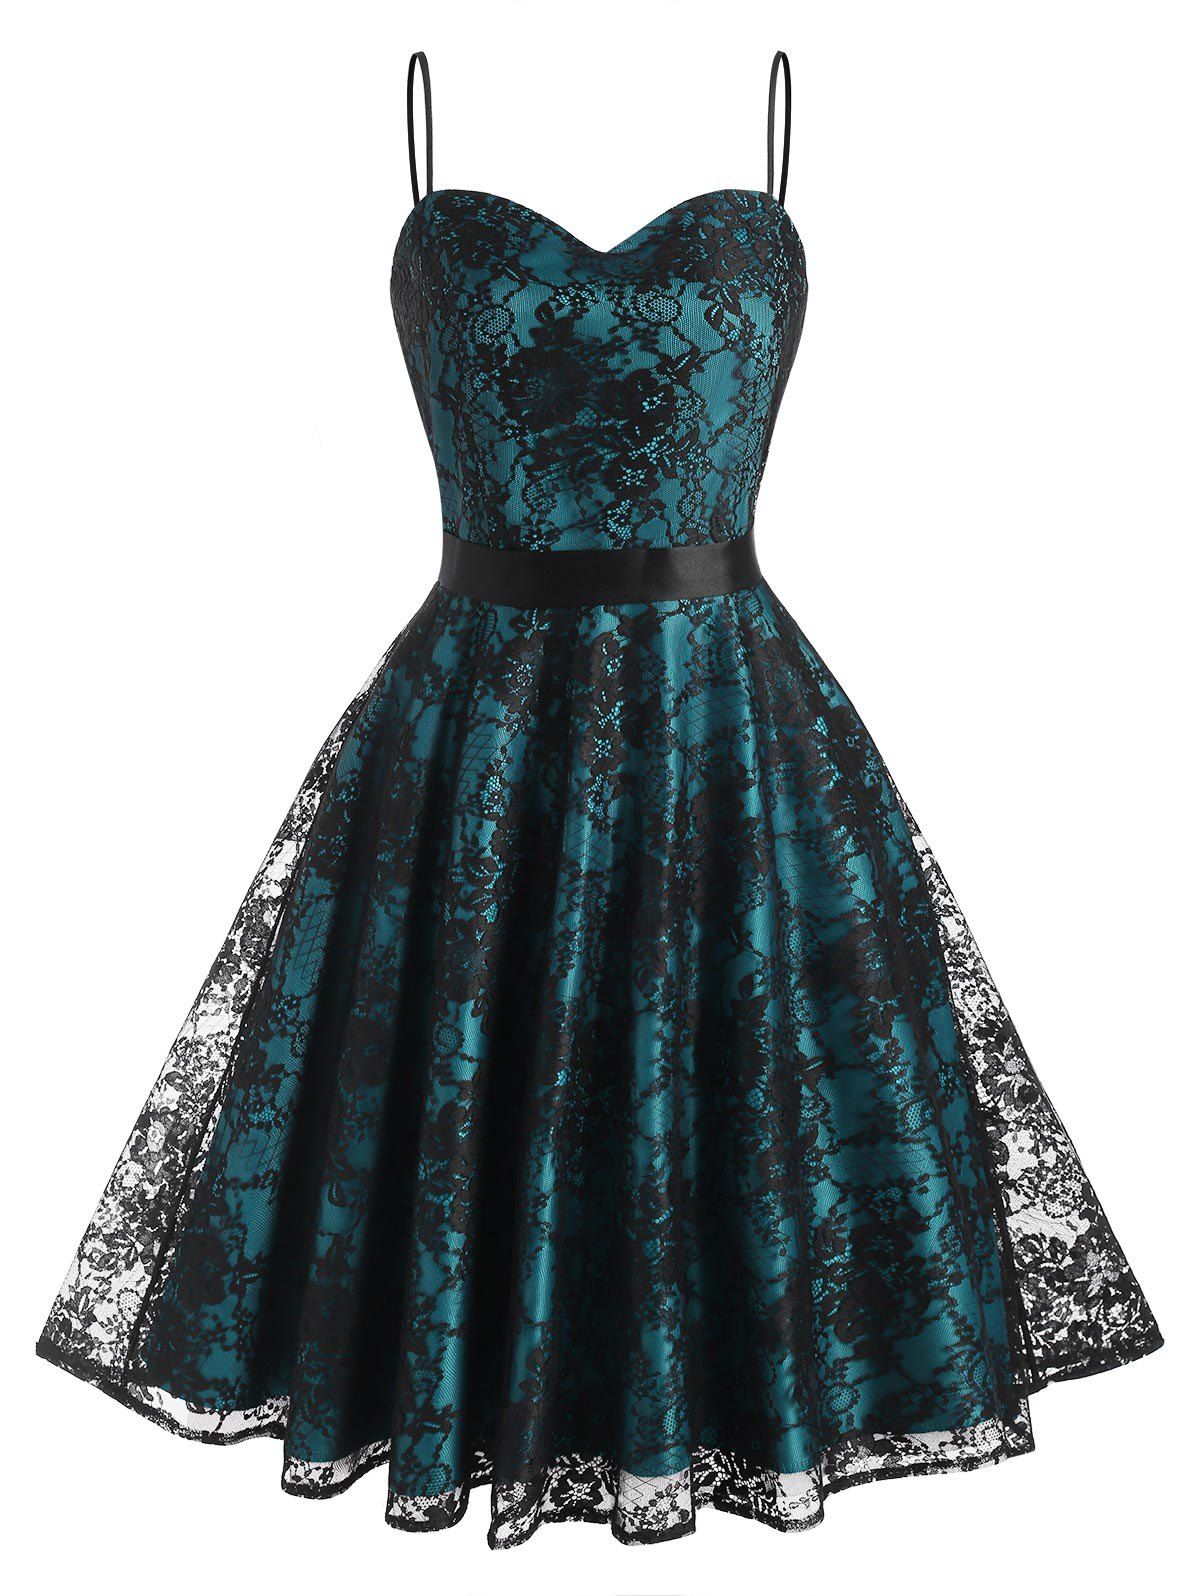 Summer Back Zipper Cami Lace Party Dress - BLUE 2XL